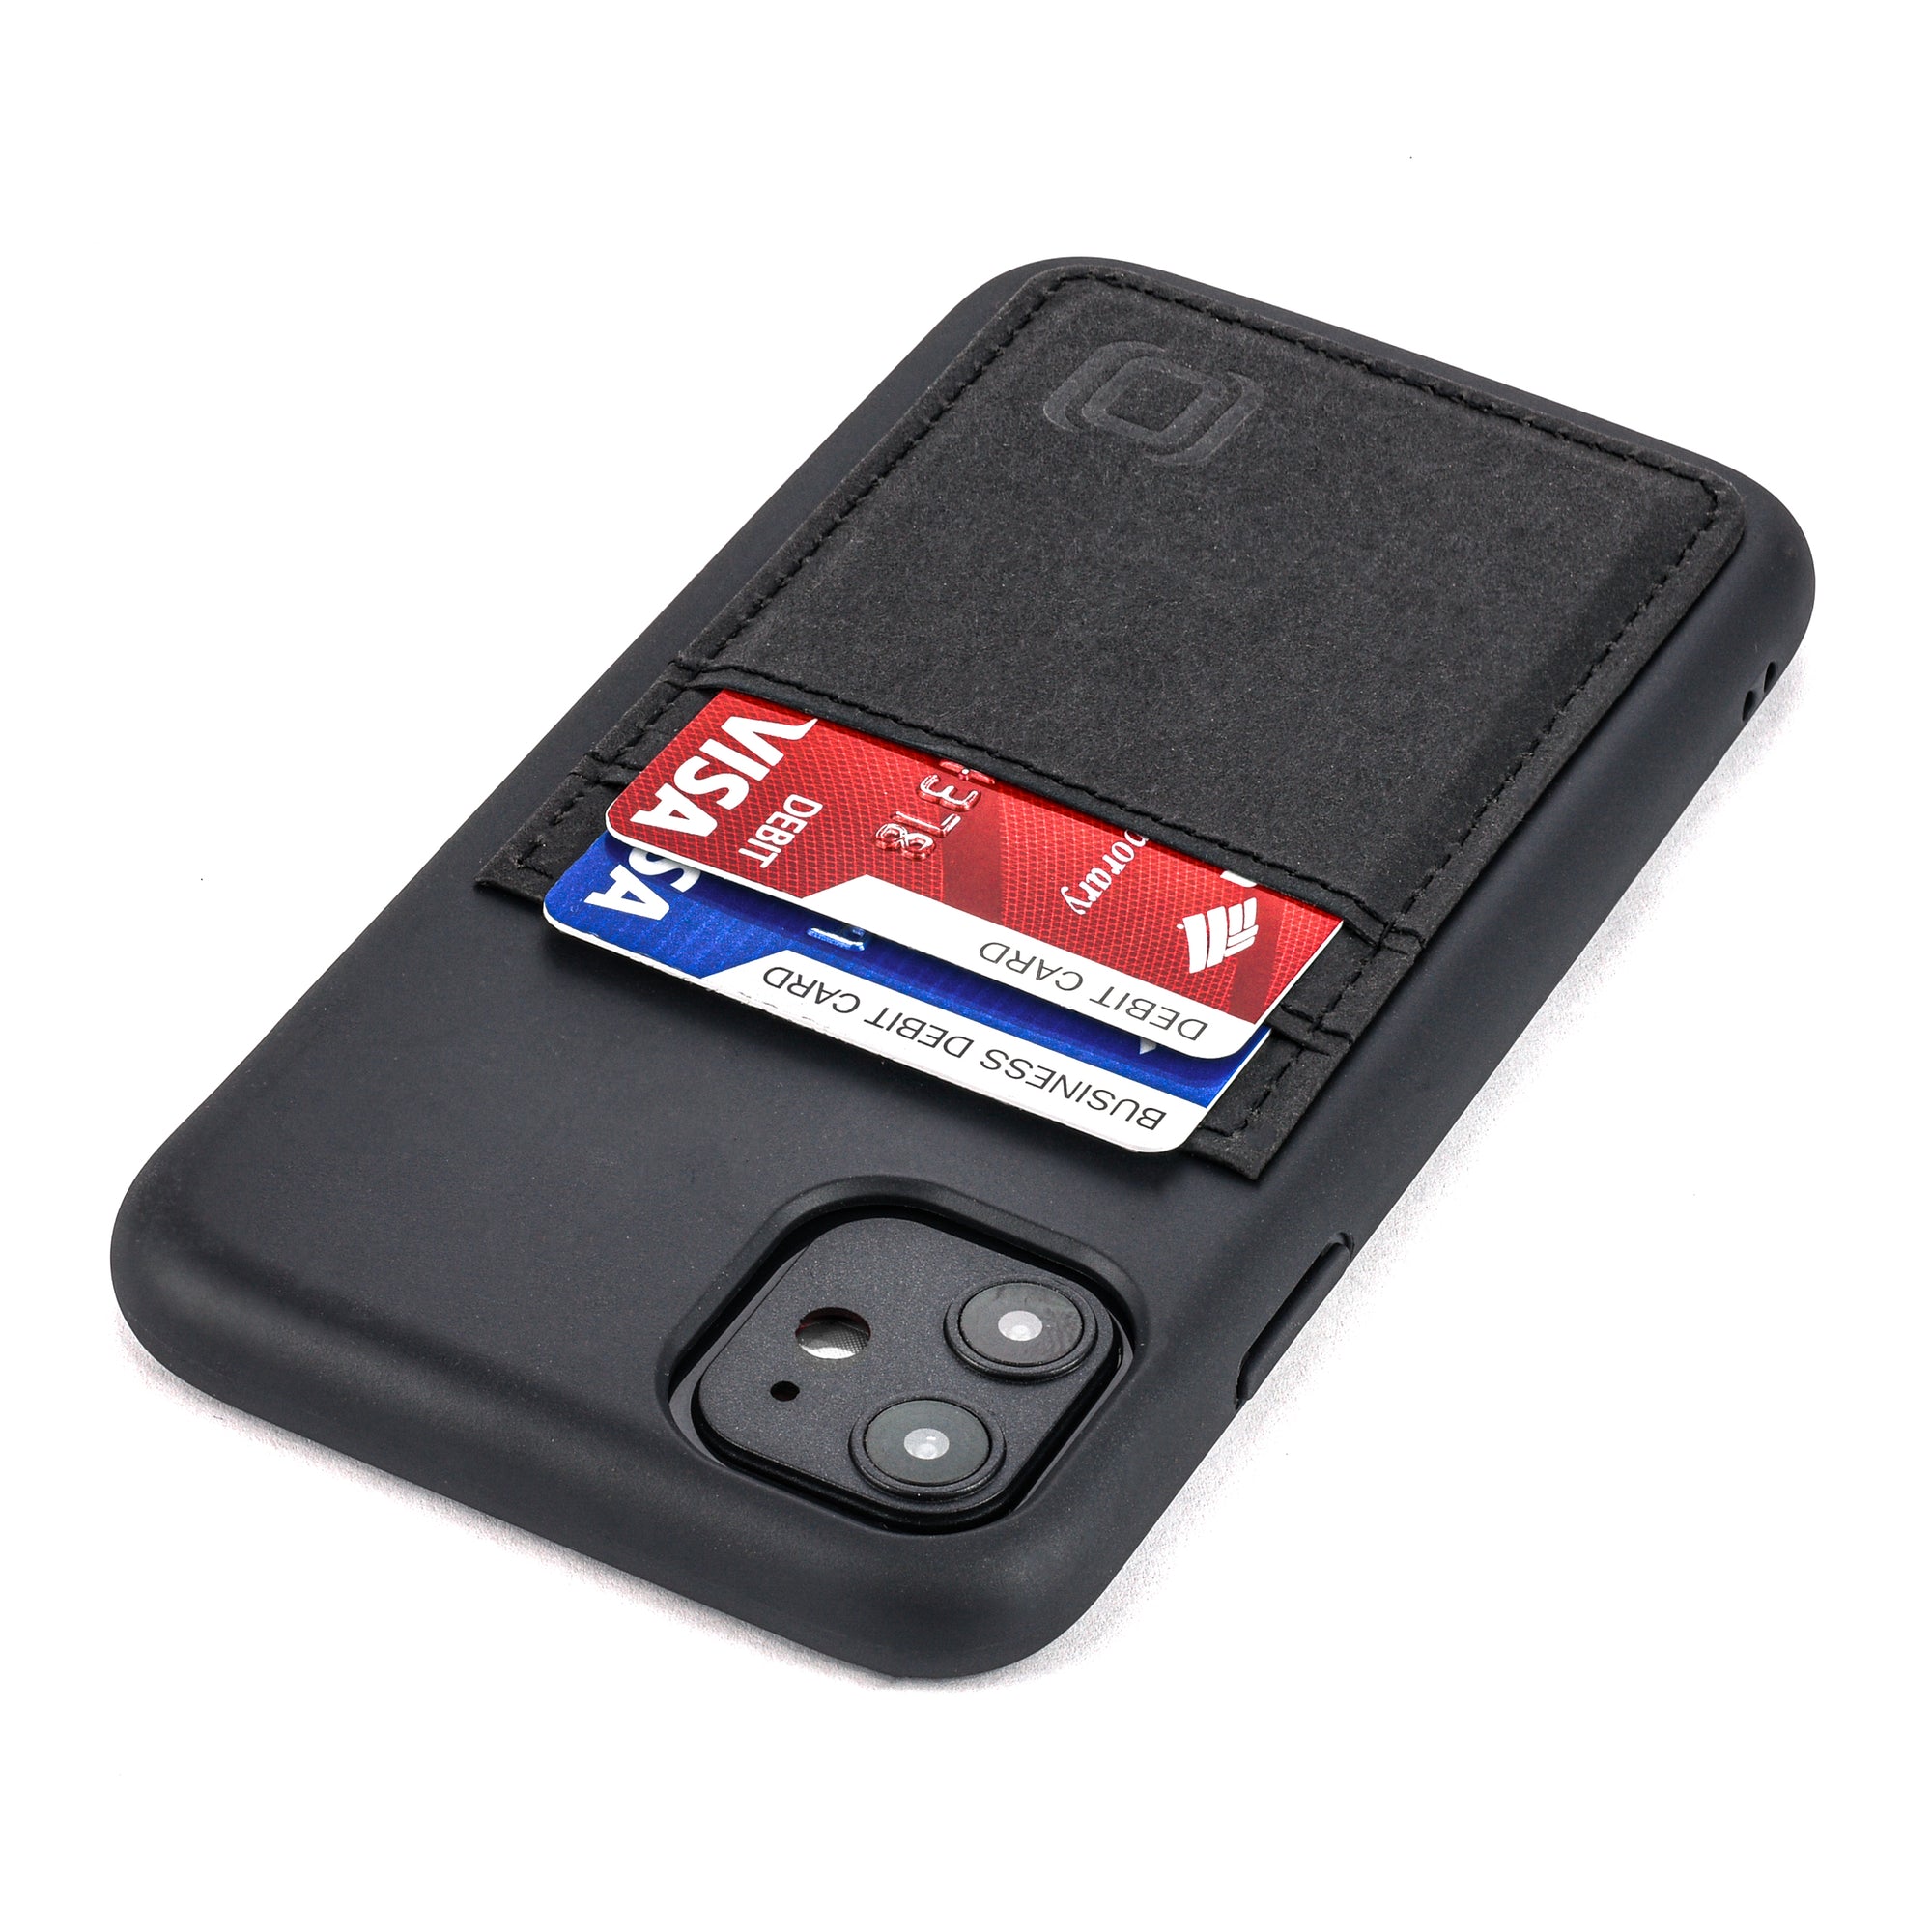 iPhone 11 Bio M2B Wallet Case [Black]